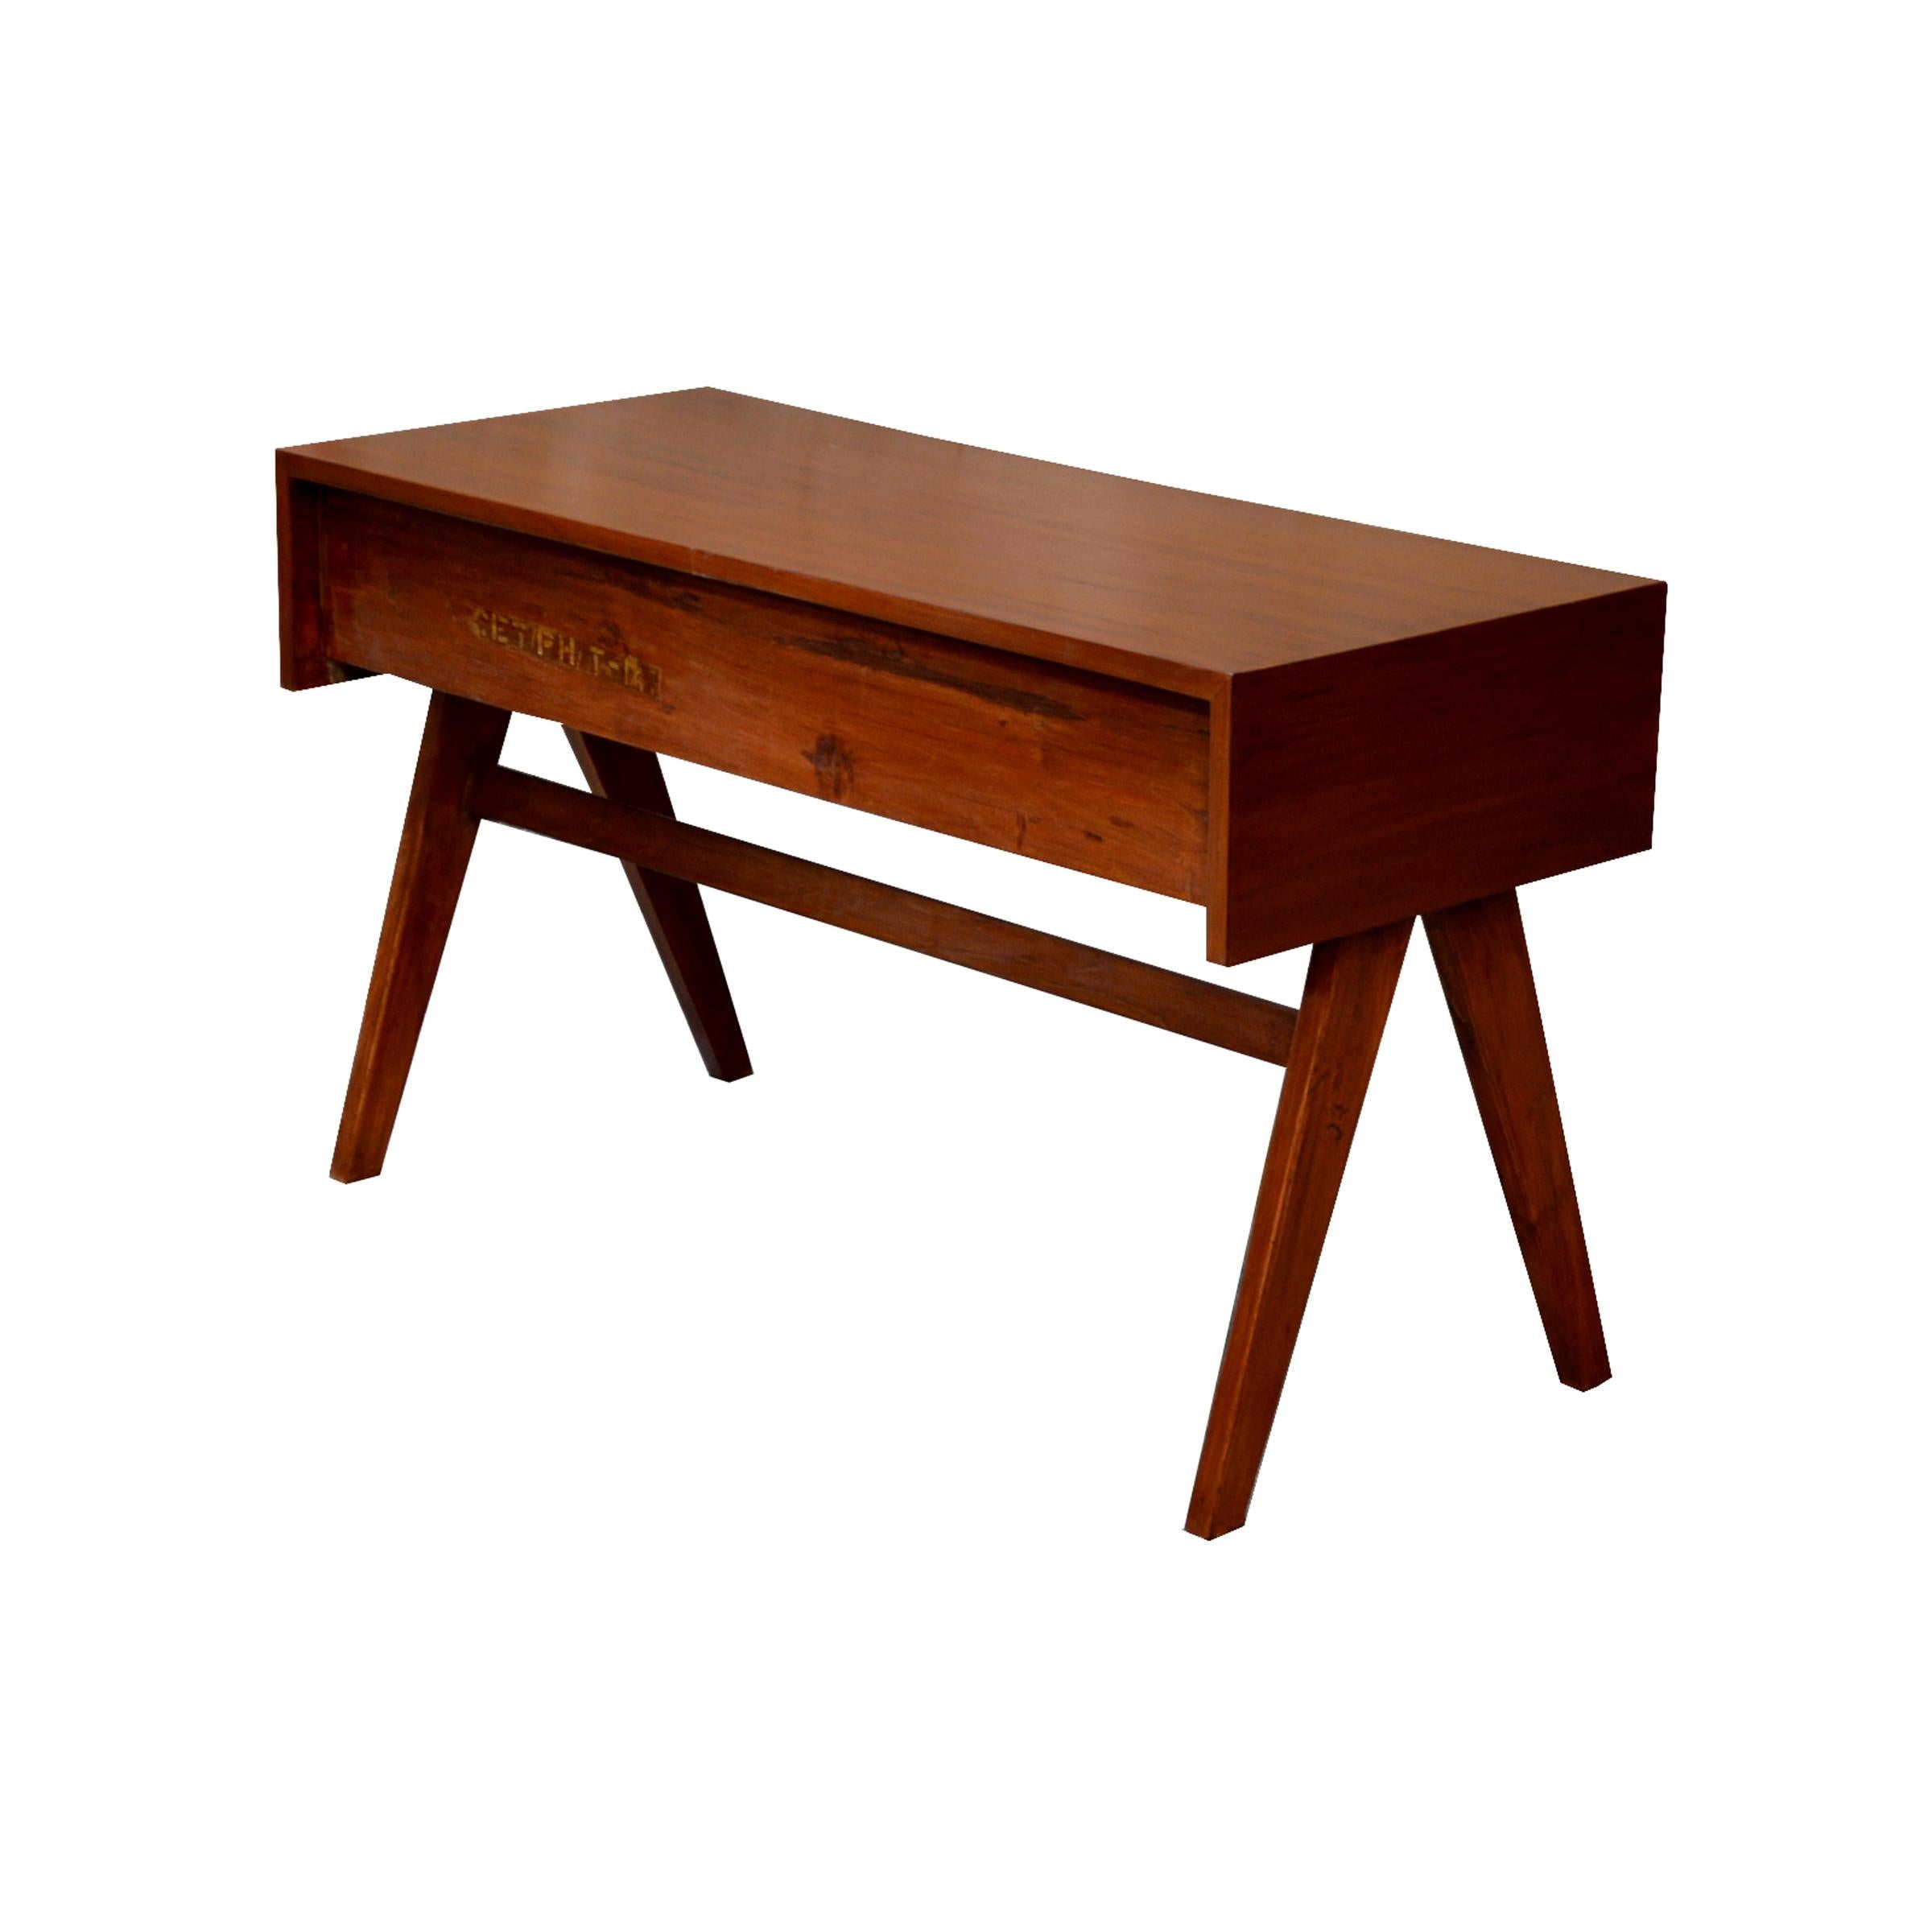 Pierre Jeanneret Student Desk with Rare Triple Original Lettering For Sale